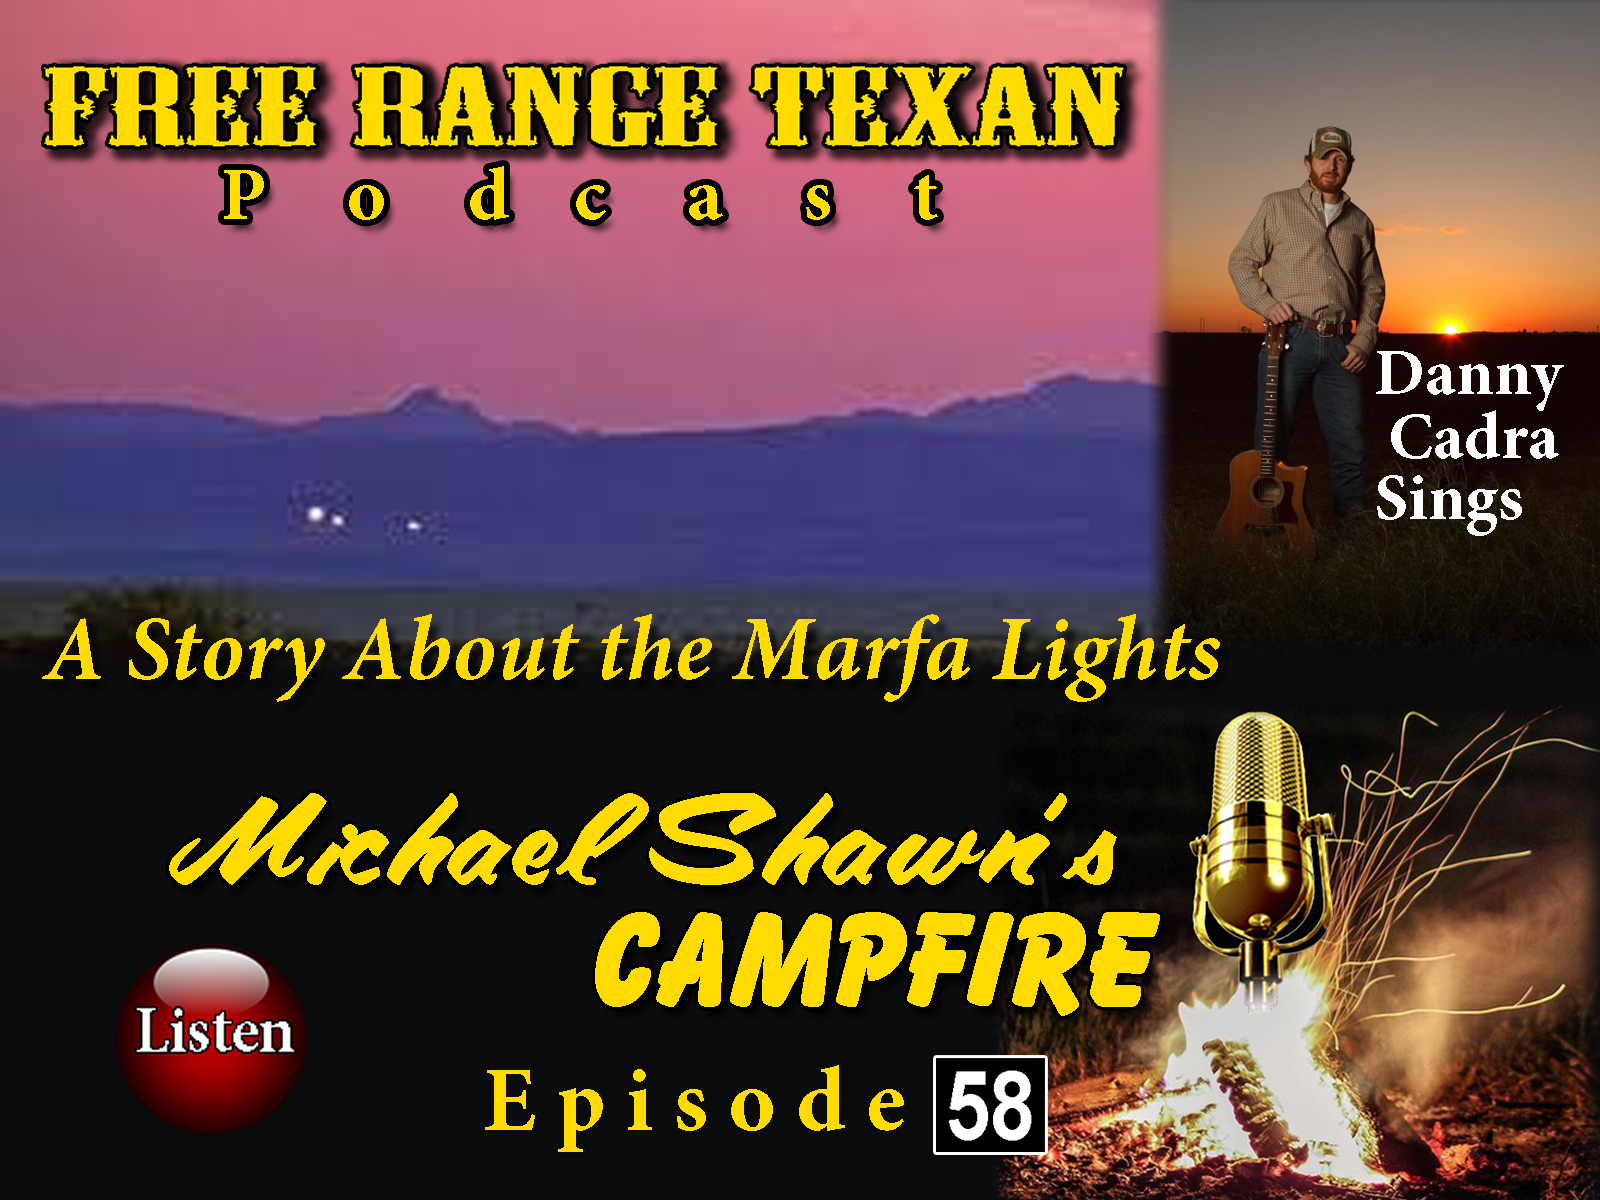 Free Range Texan Podcast Episode 58